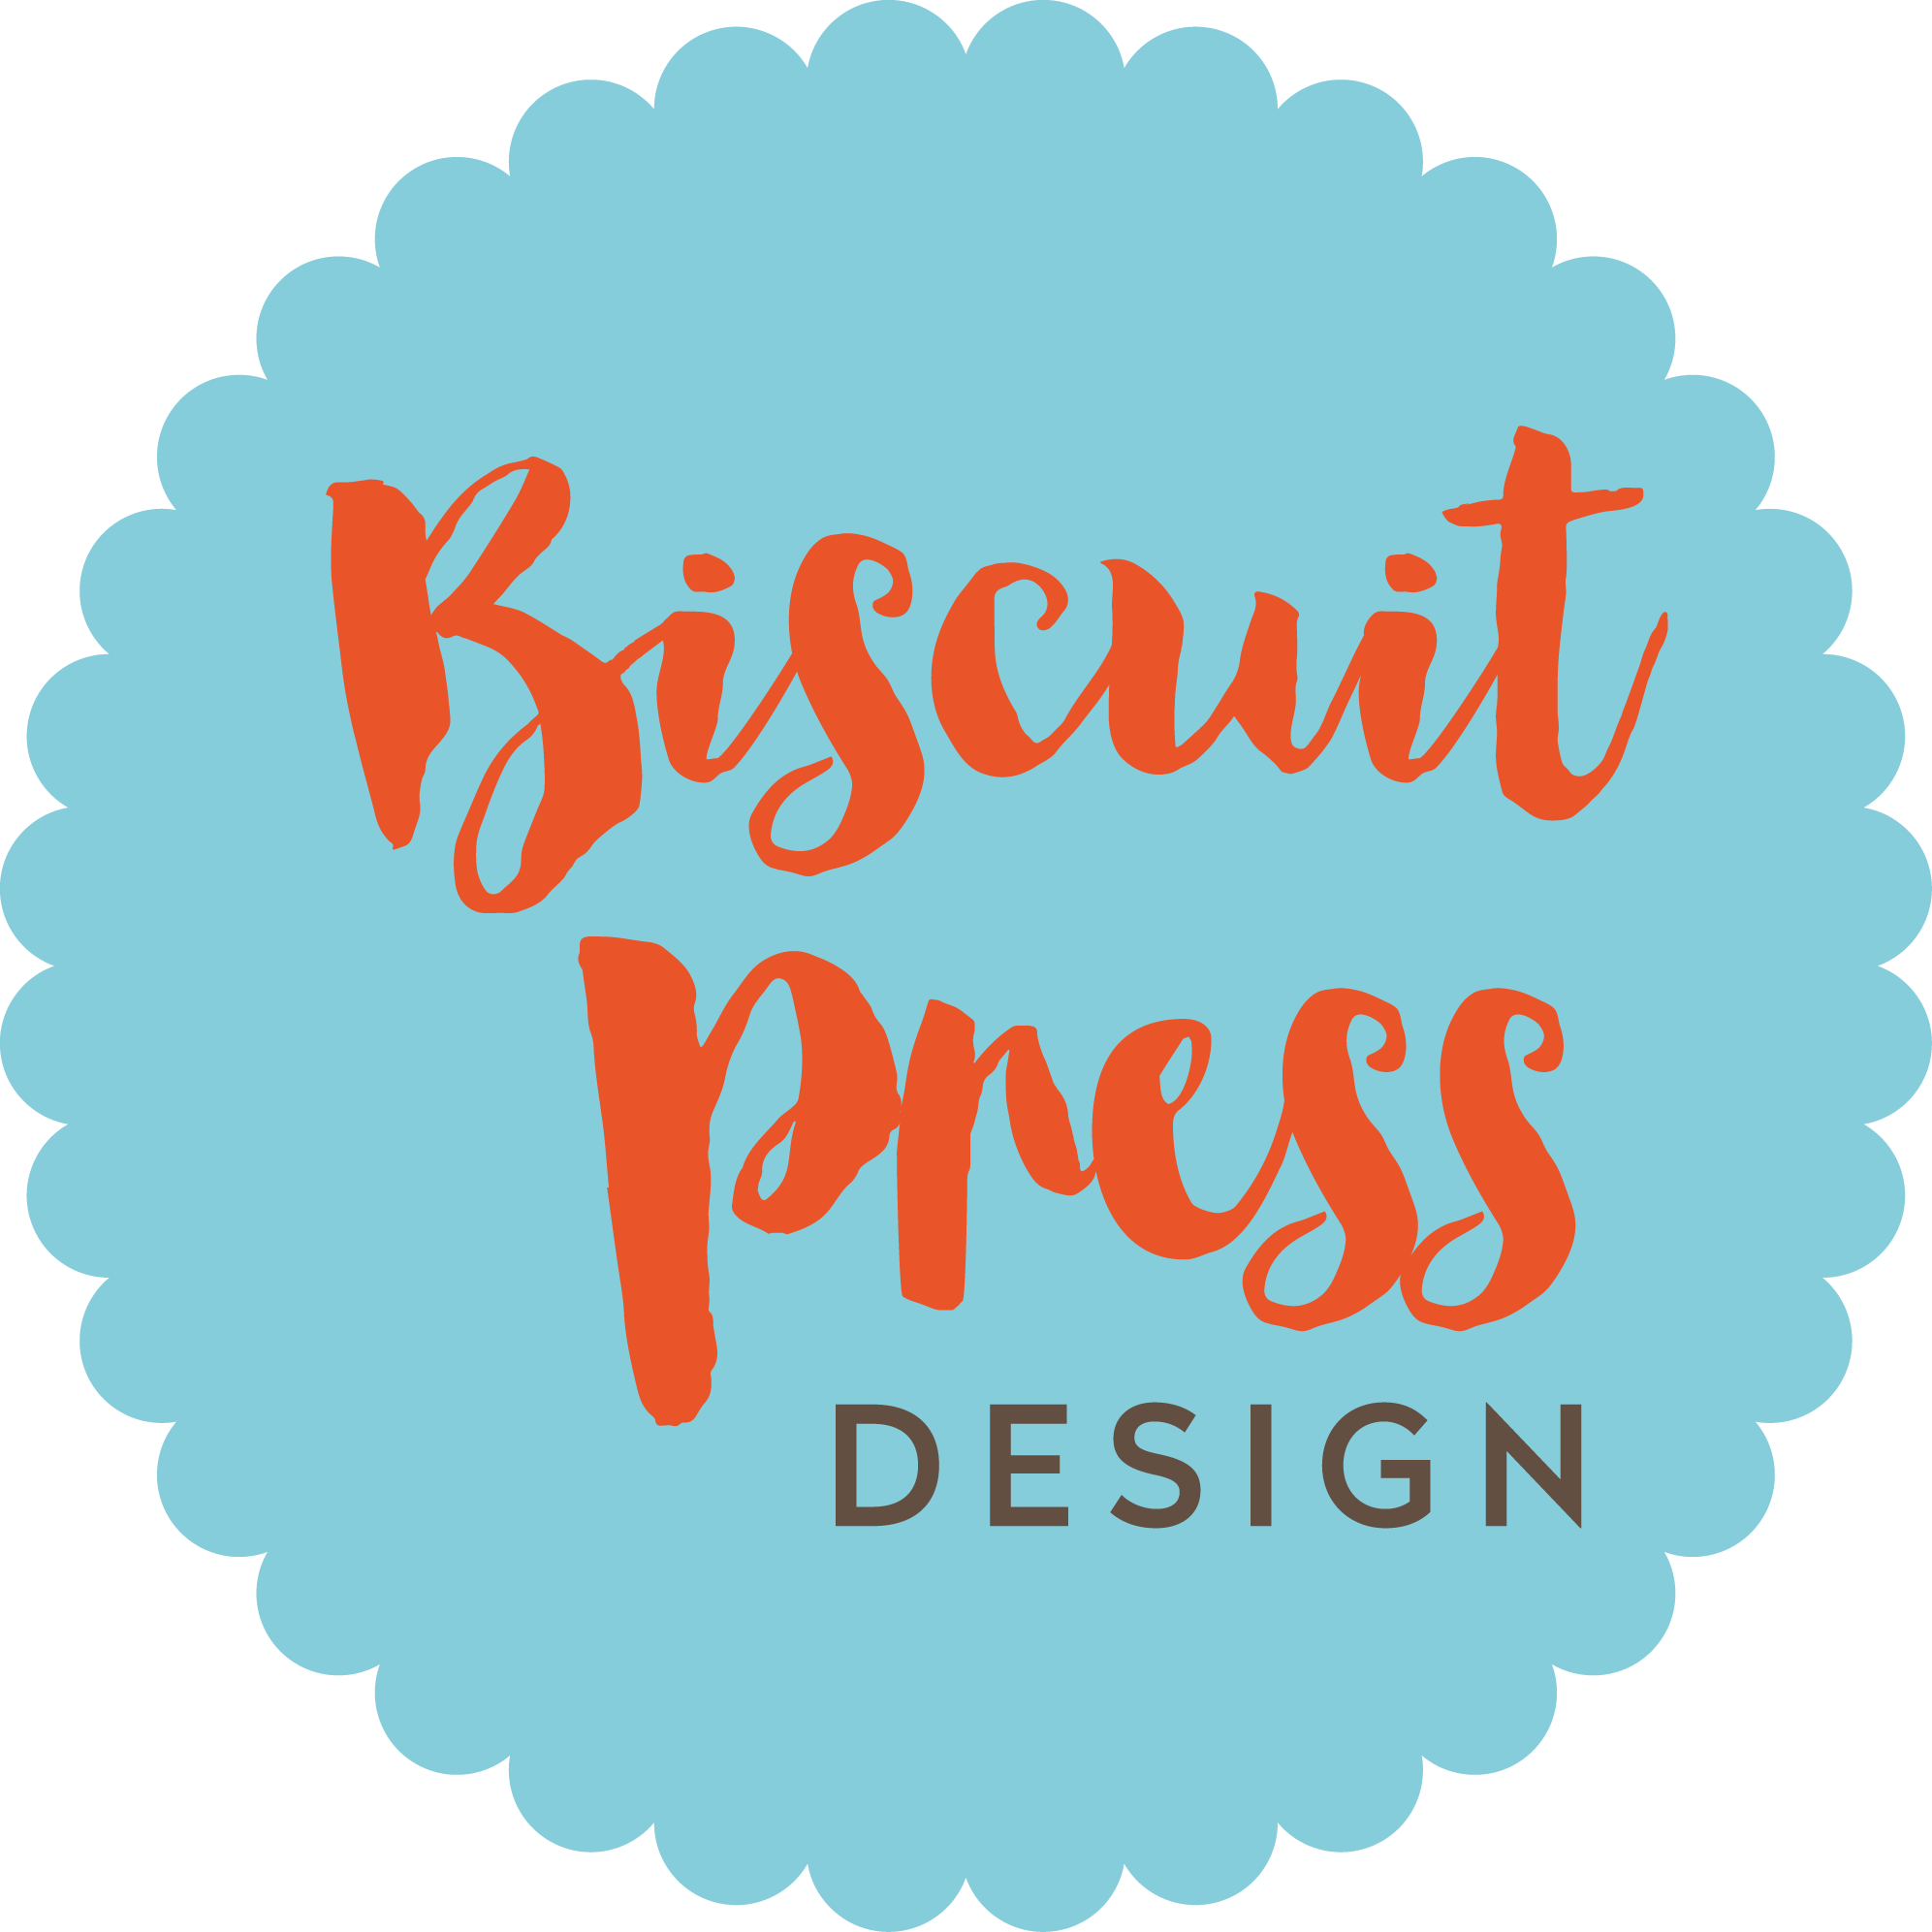 Biscuit Press Design